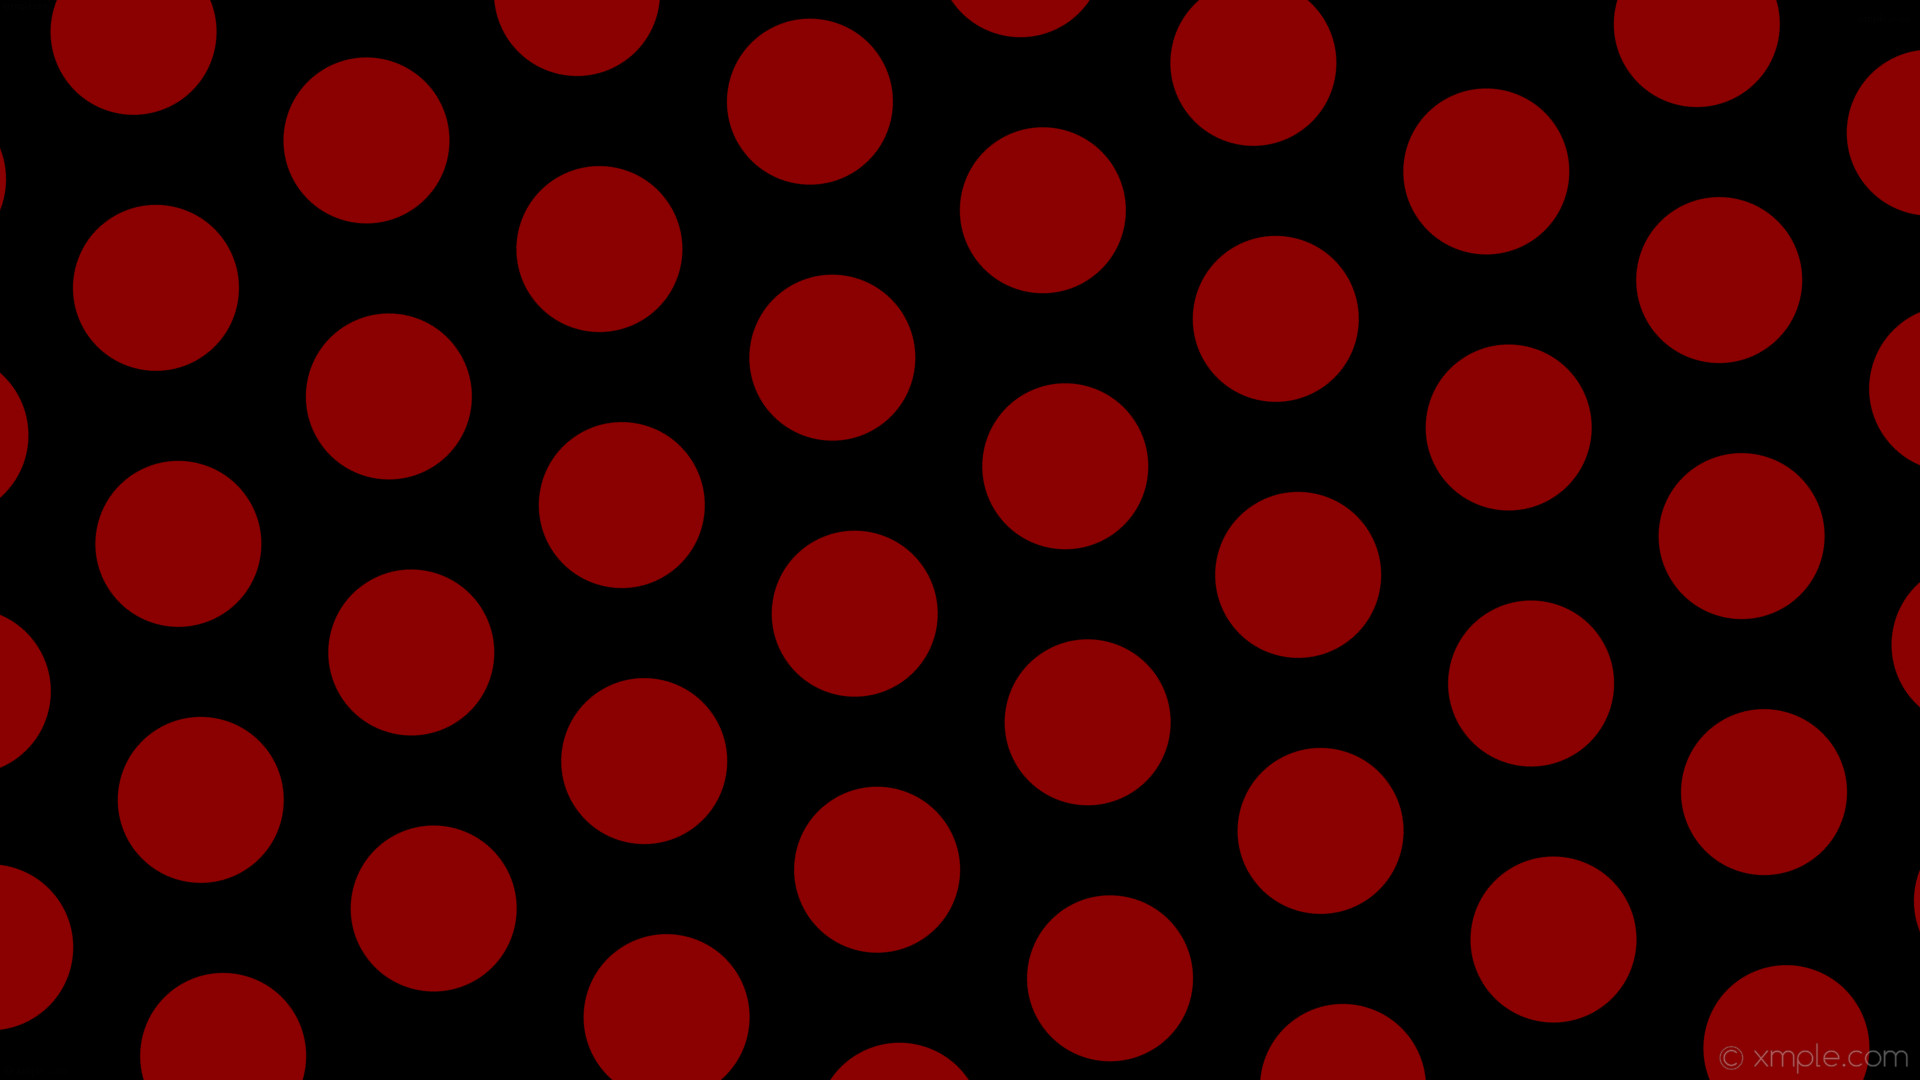 Wallpaper red hexagon black polka dots dark red b0000 diagonal 35 166px